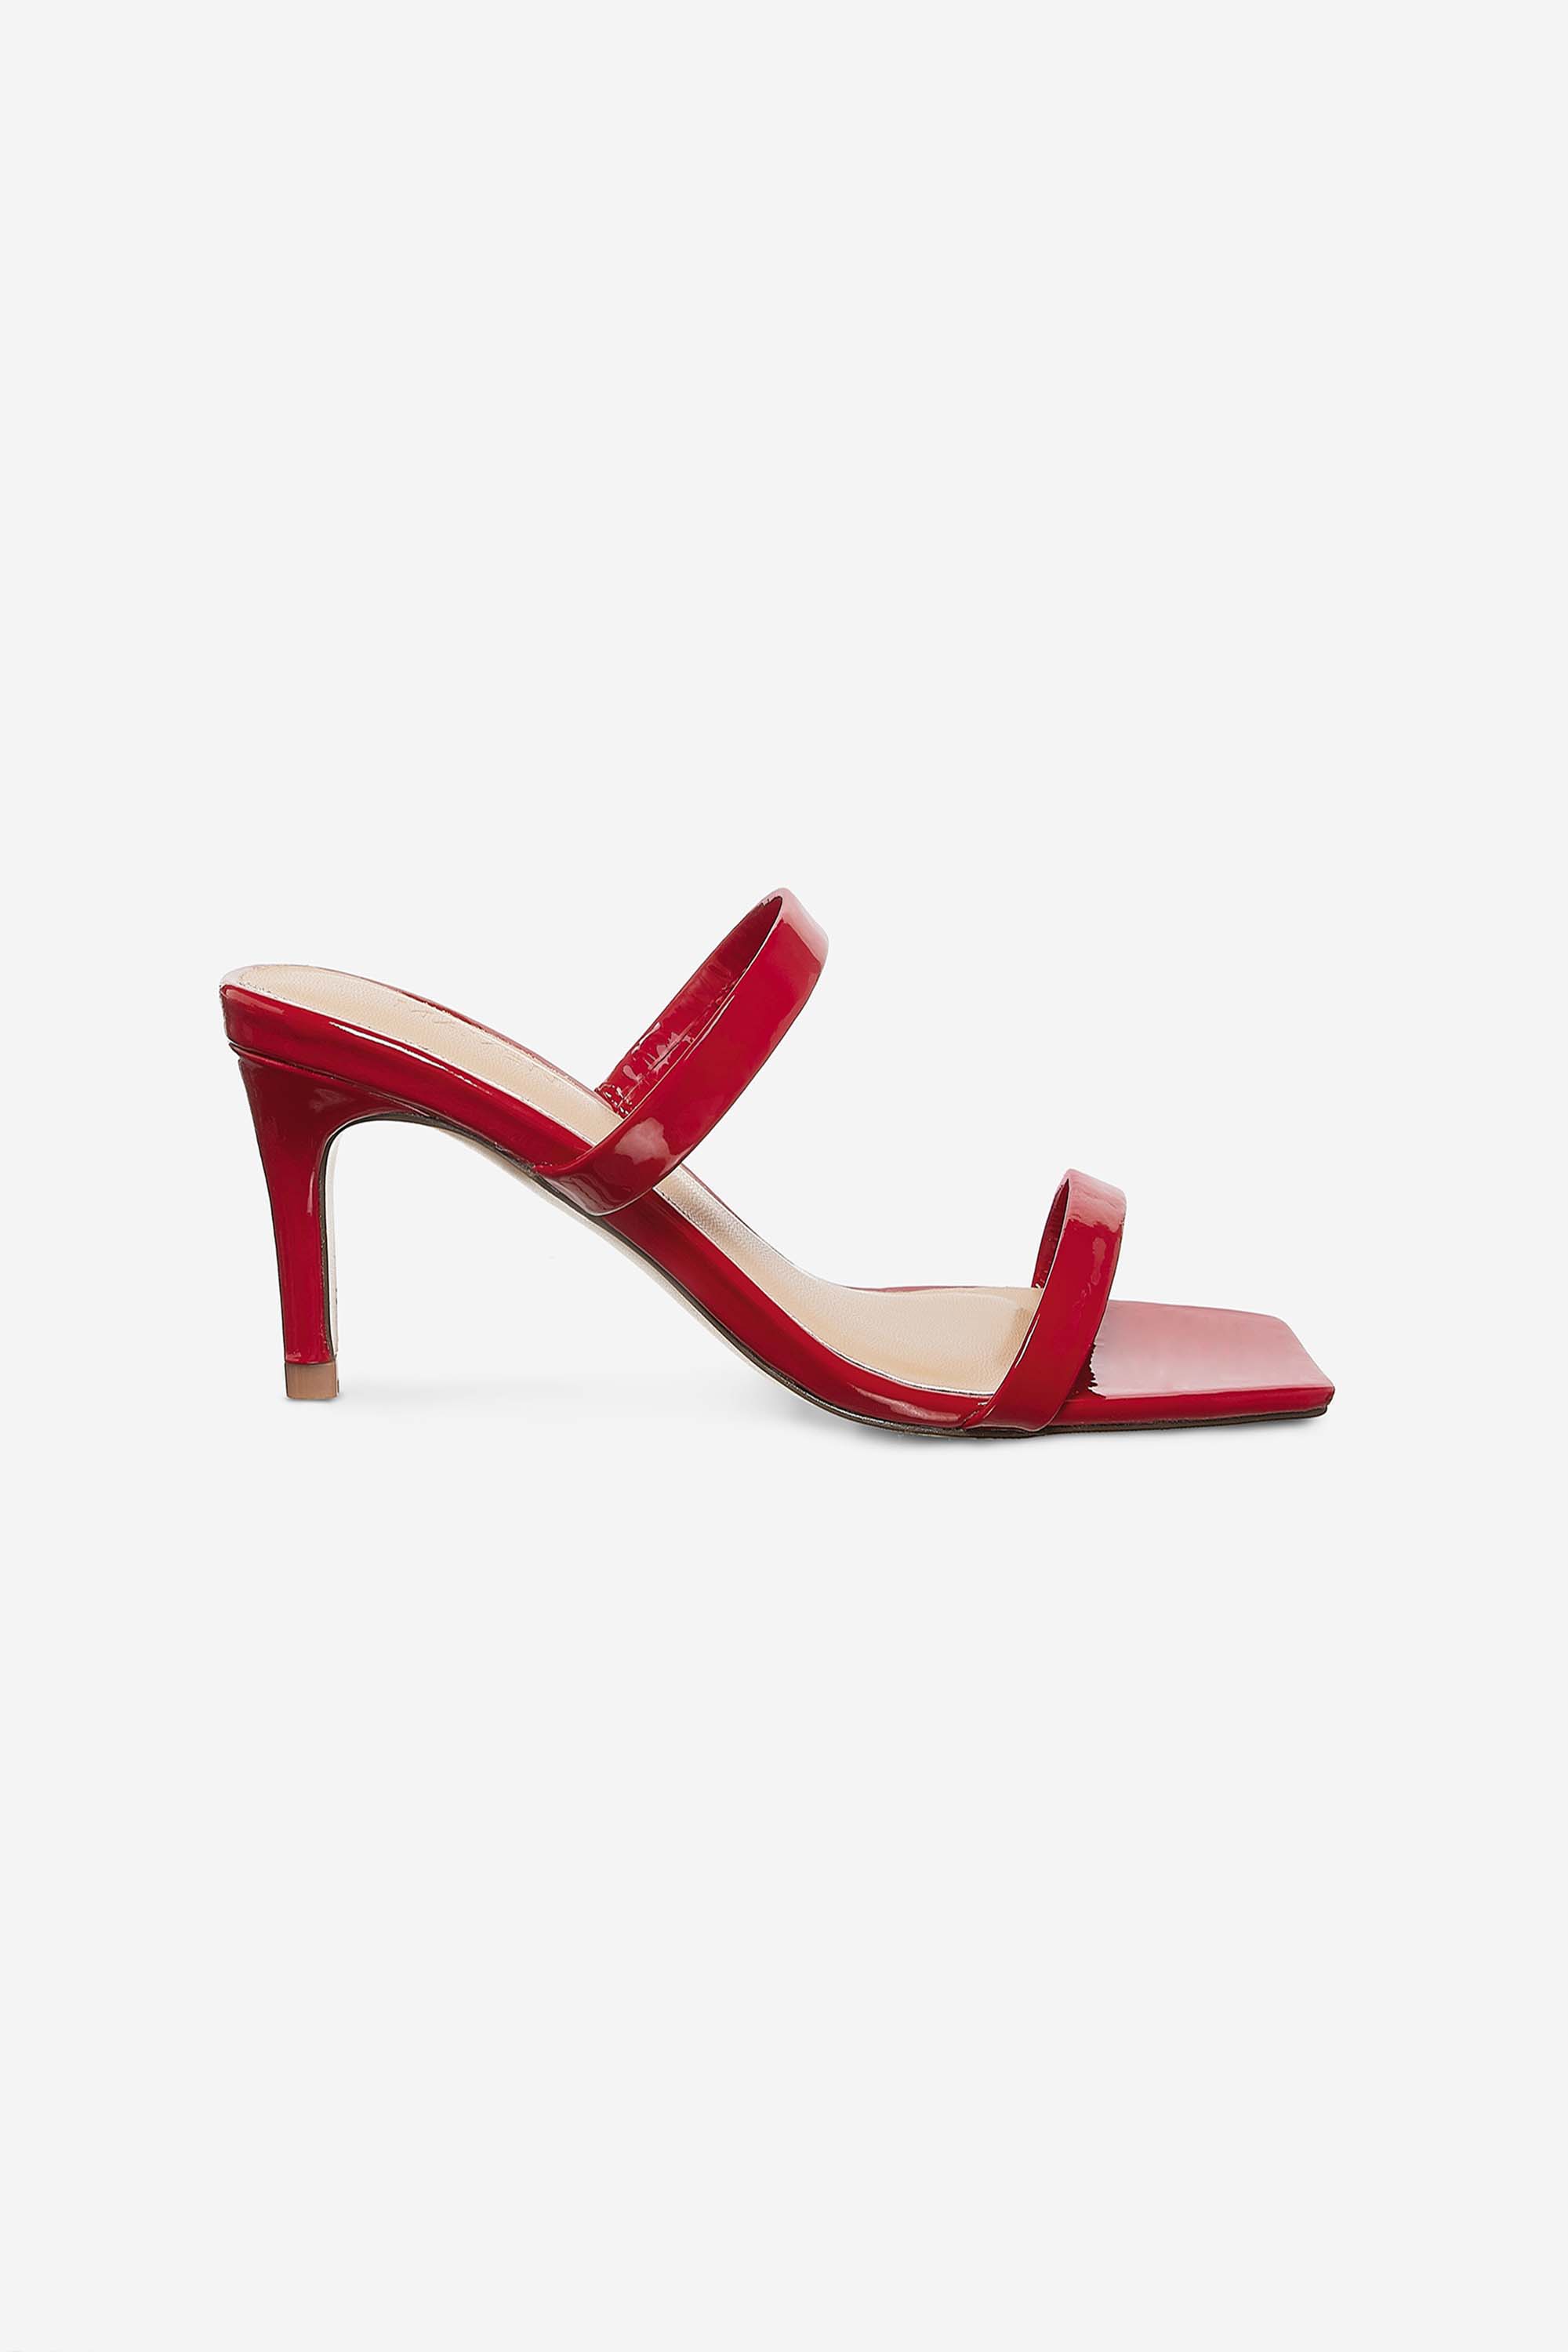 Sandy Red Heels